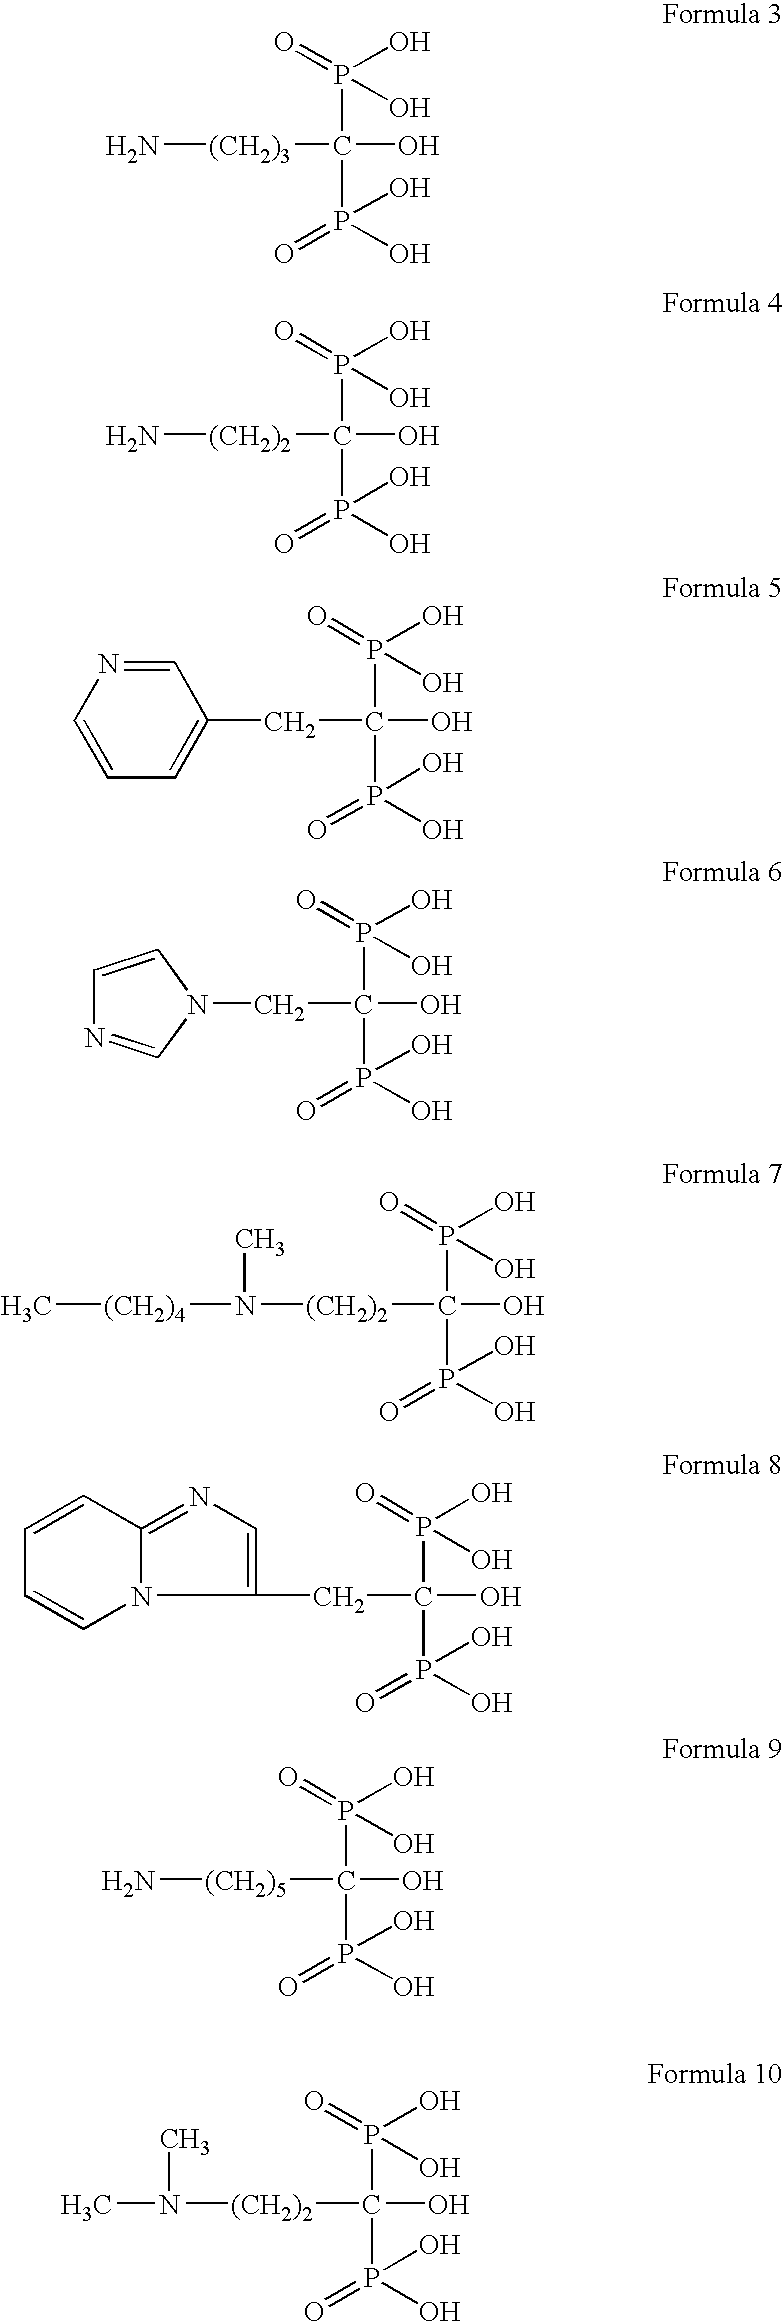 Process for preparation of bisphosphonic acid compounds